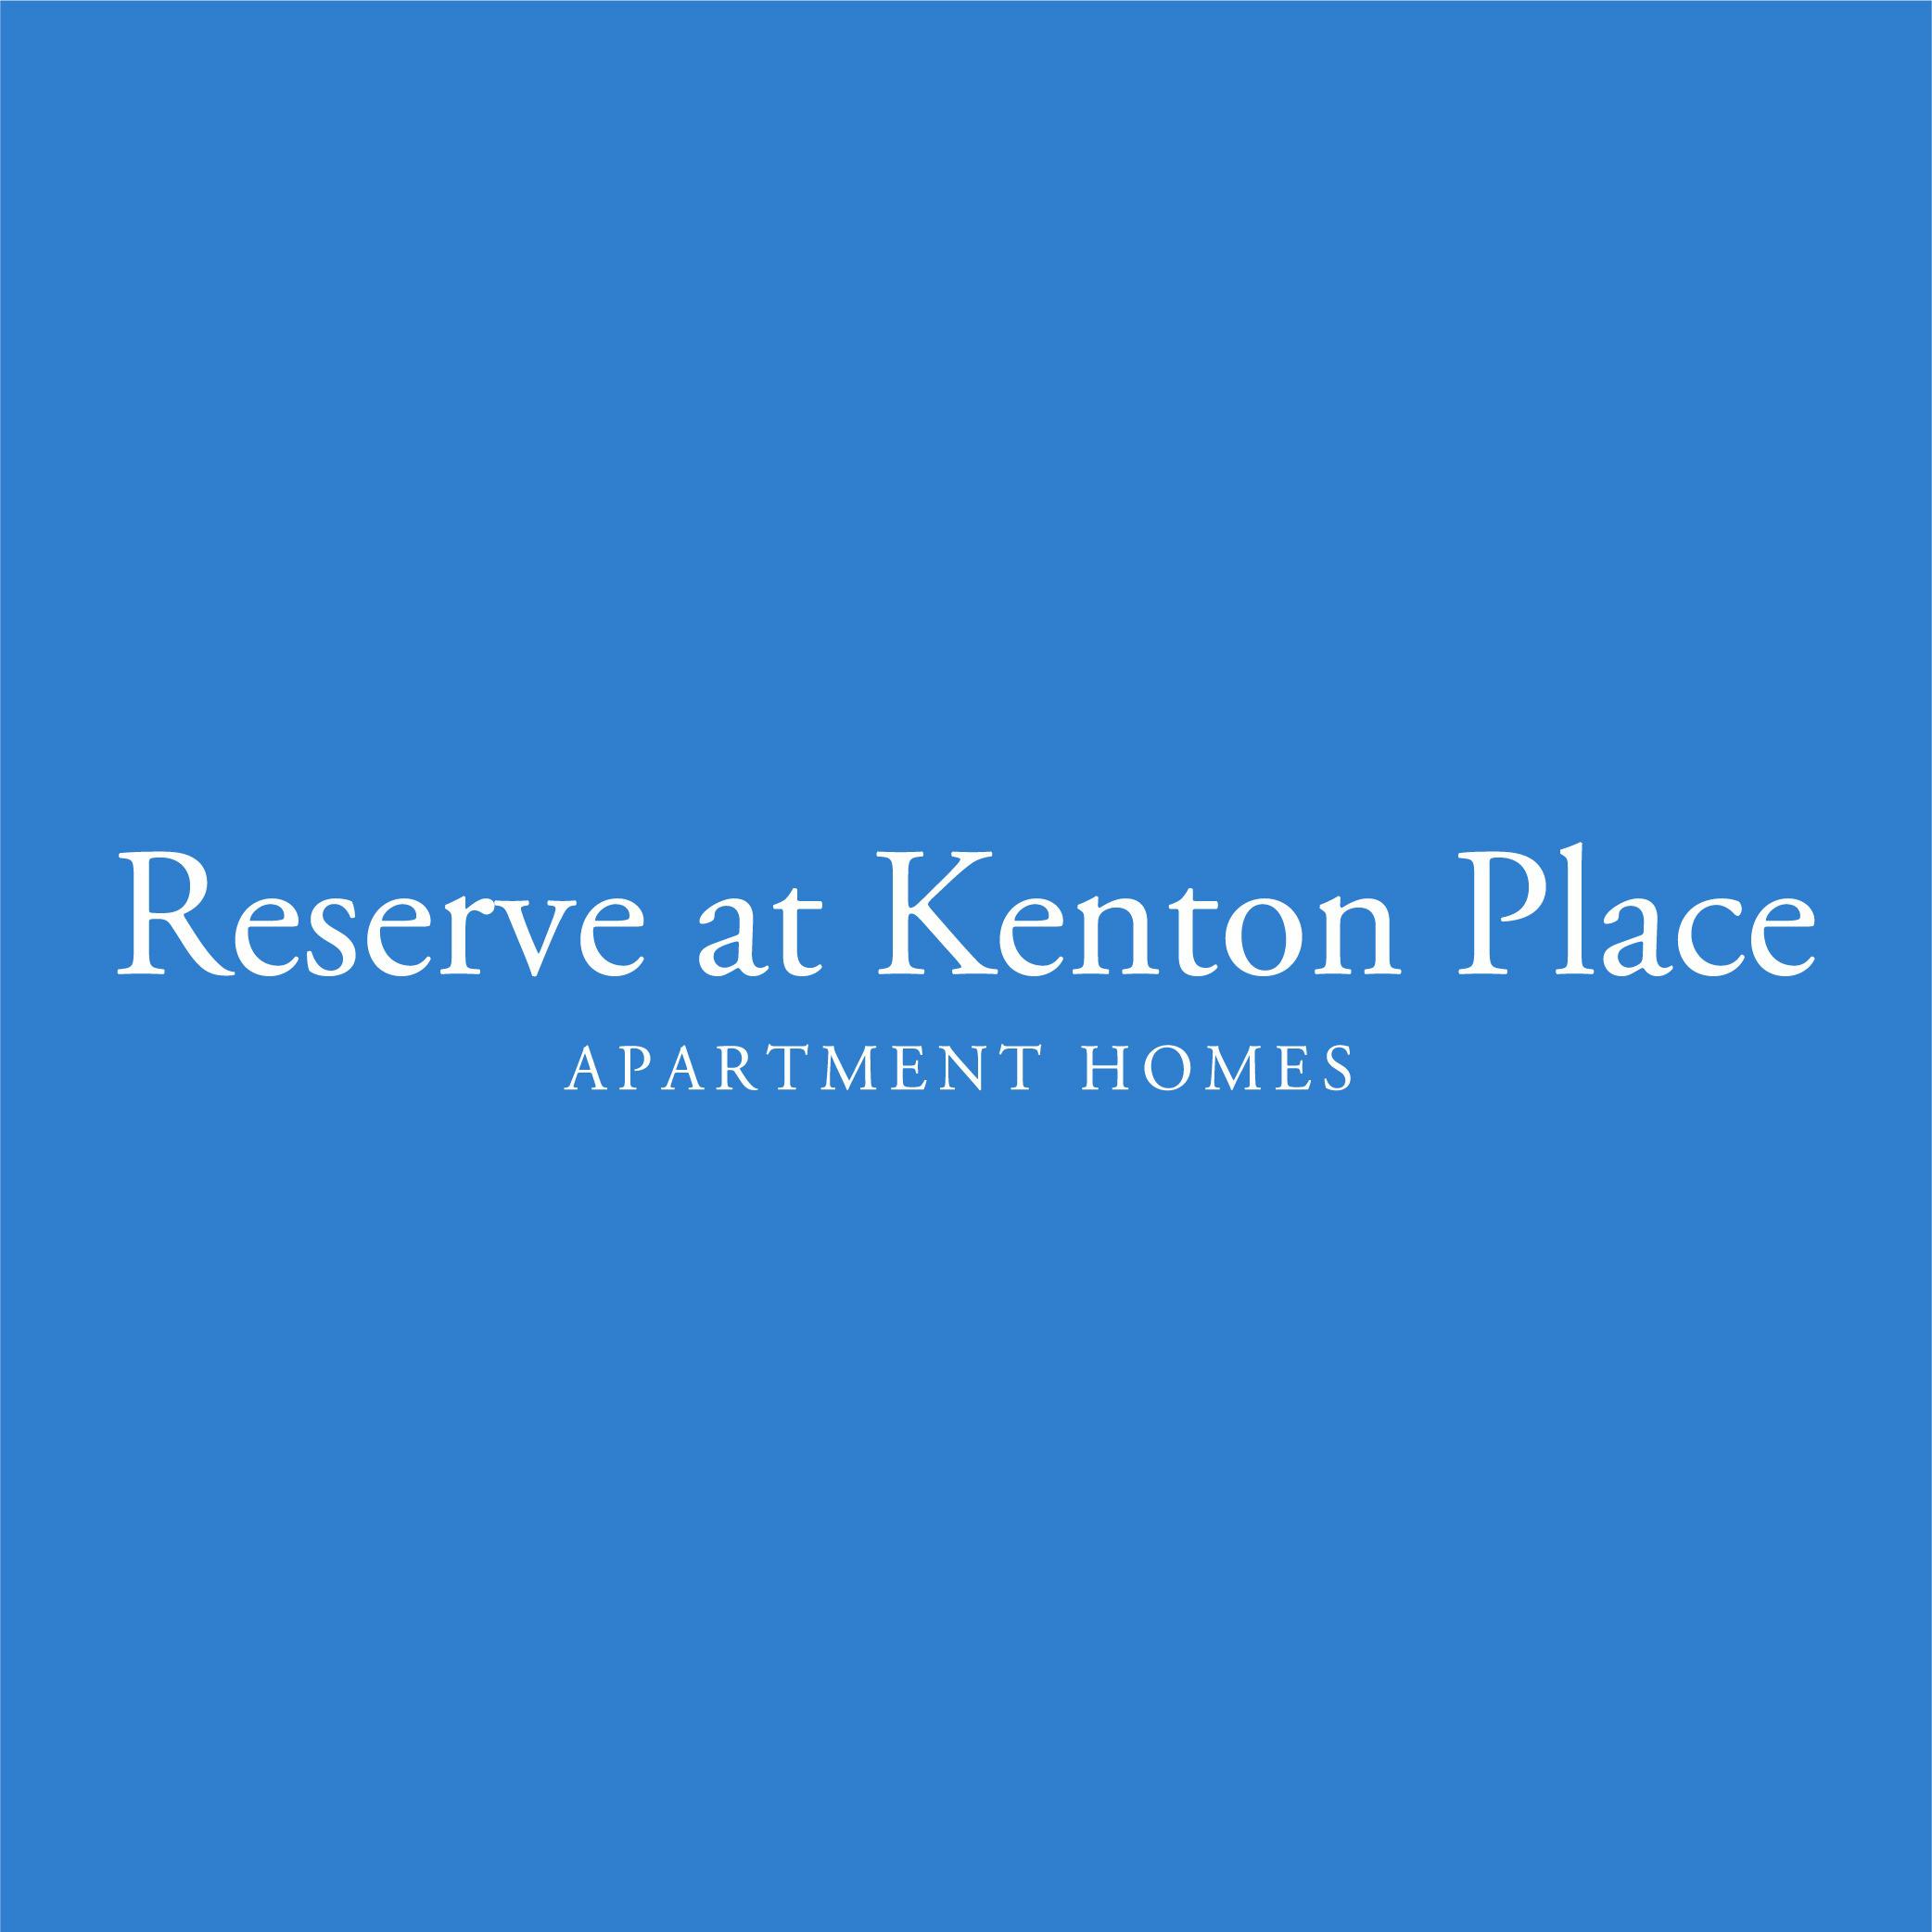 Reserve at Kenton Place Apartment Homes - Cornelius, NC 28031 - (704)765-1456 | ShowMeLocal.com